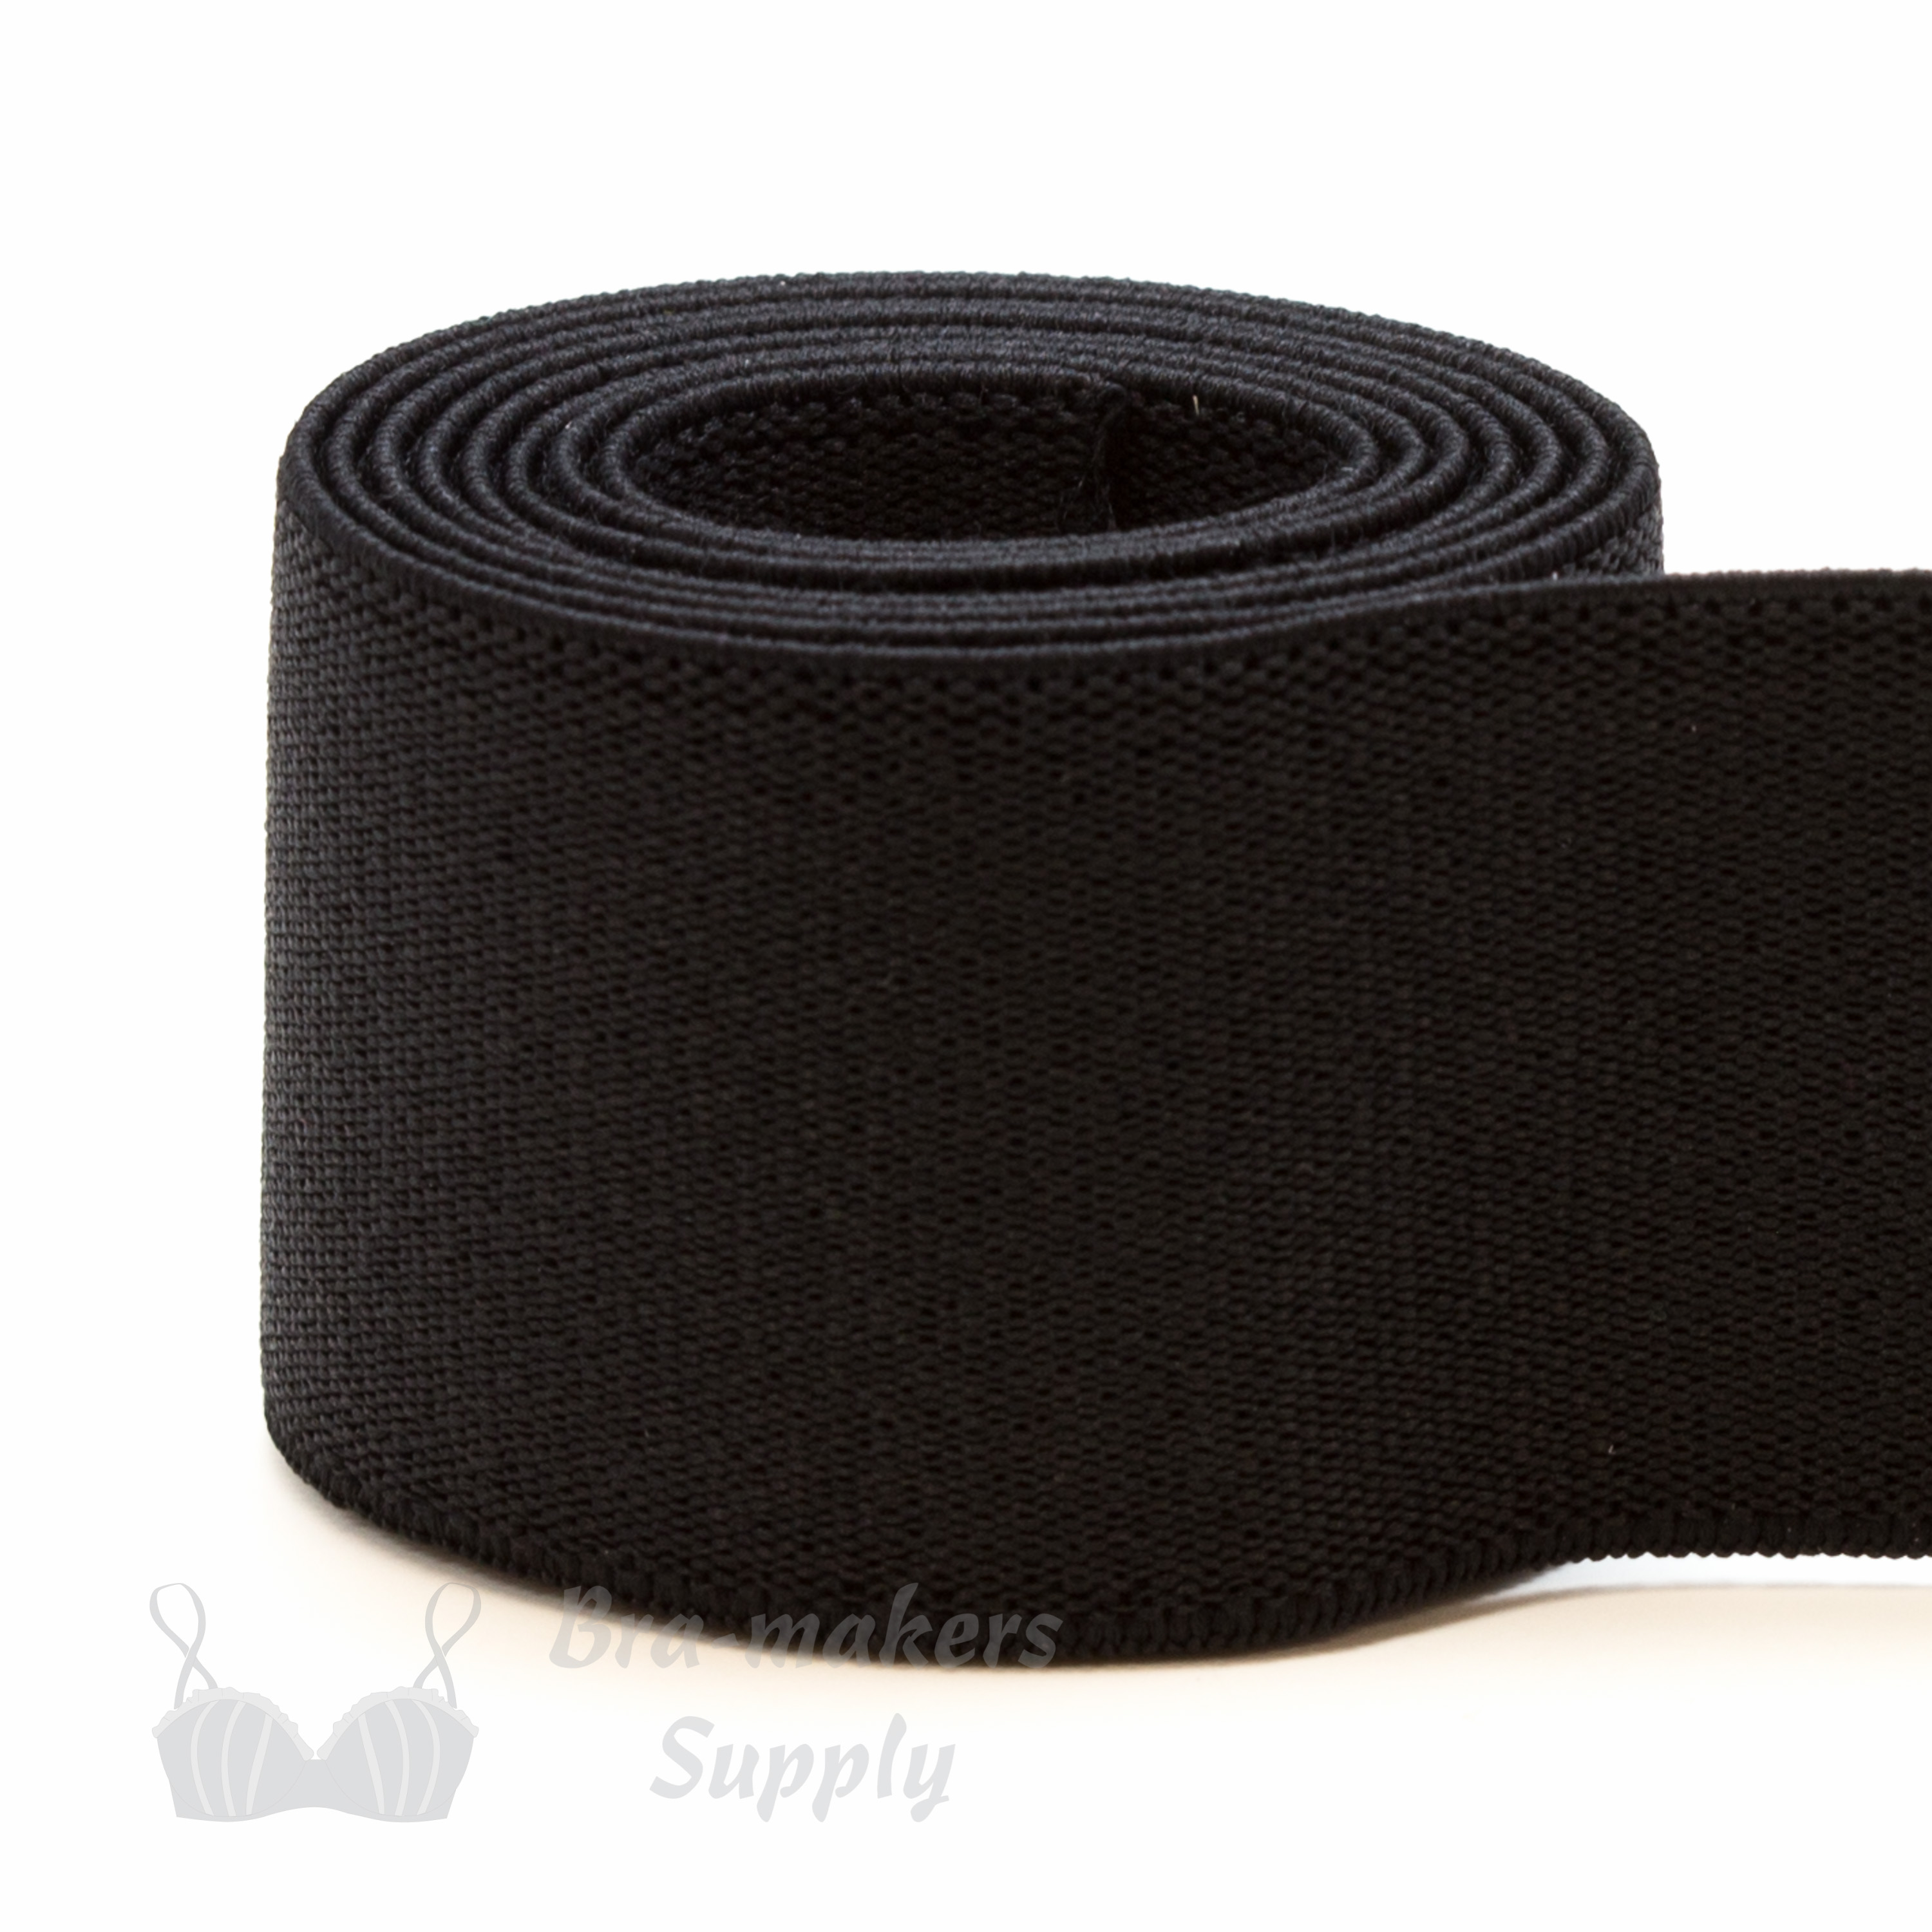 https://www.braandcorsetsupplies.com/wp-content/uploads/2016/09/plush-waistband-elastic-sports-bra-elastic-EP-137.98-from-Bra-Makers-Supply-1-metre-roll-shown-.jpg